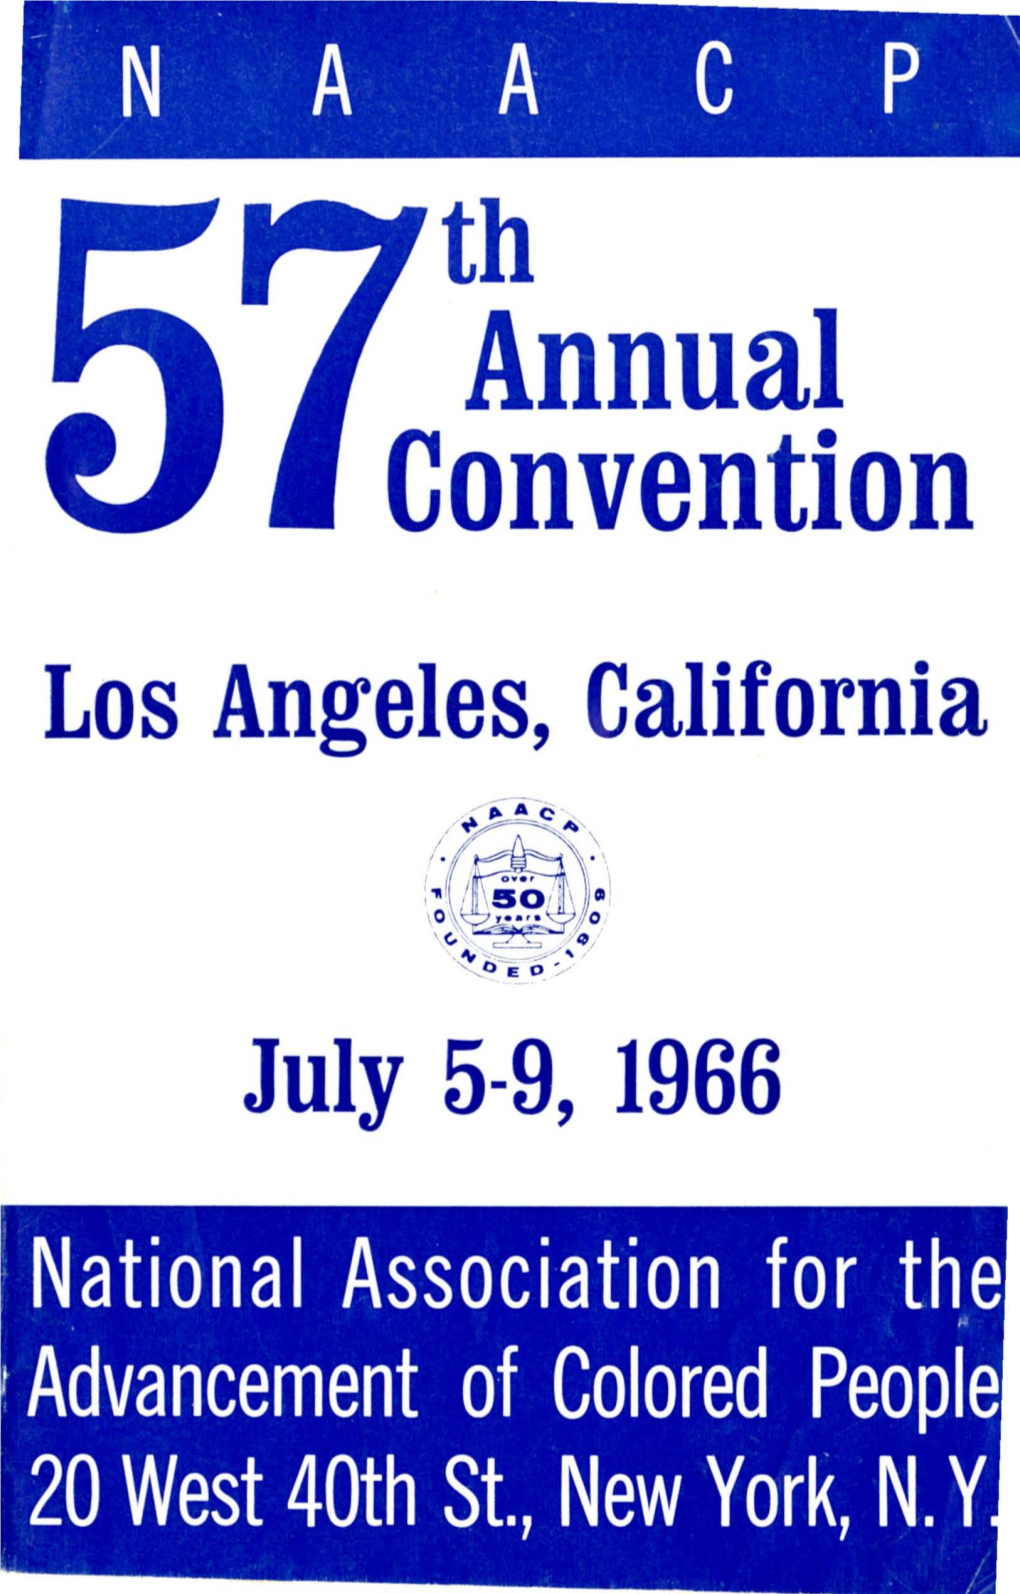 Annual Convention Los Angeles, California